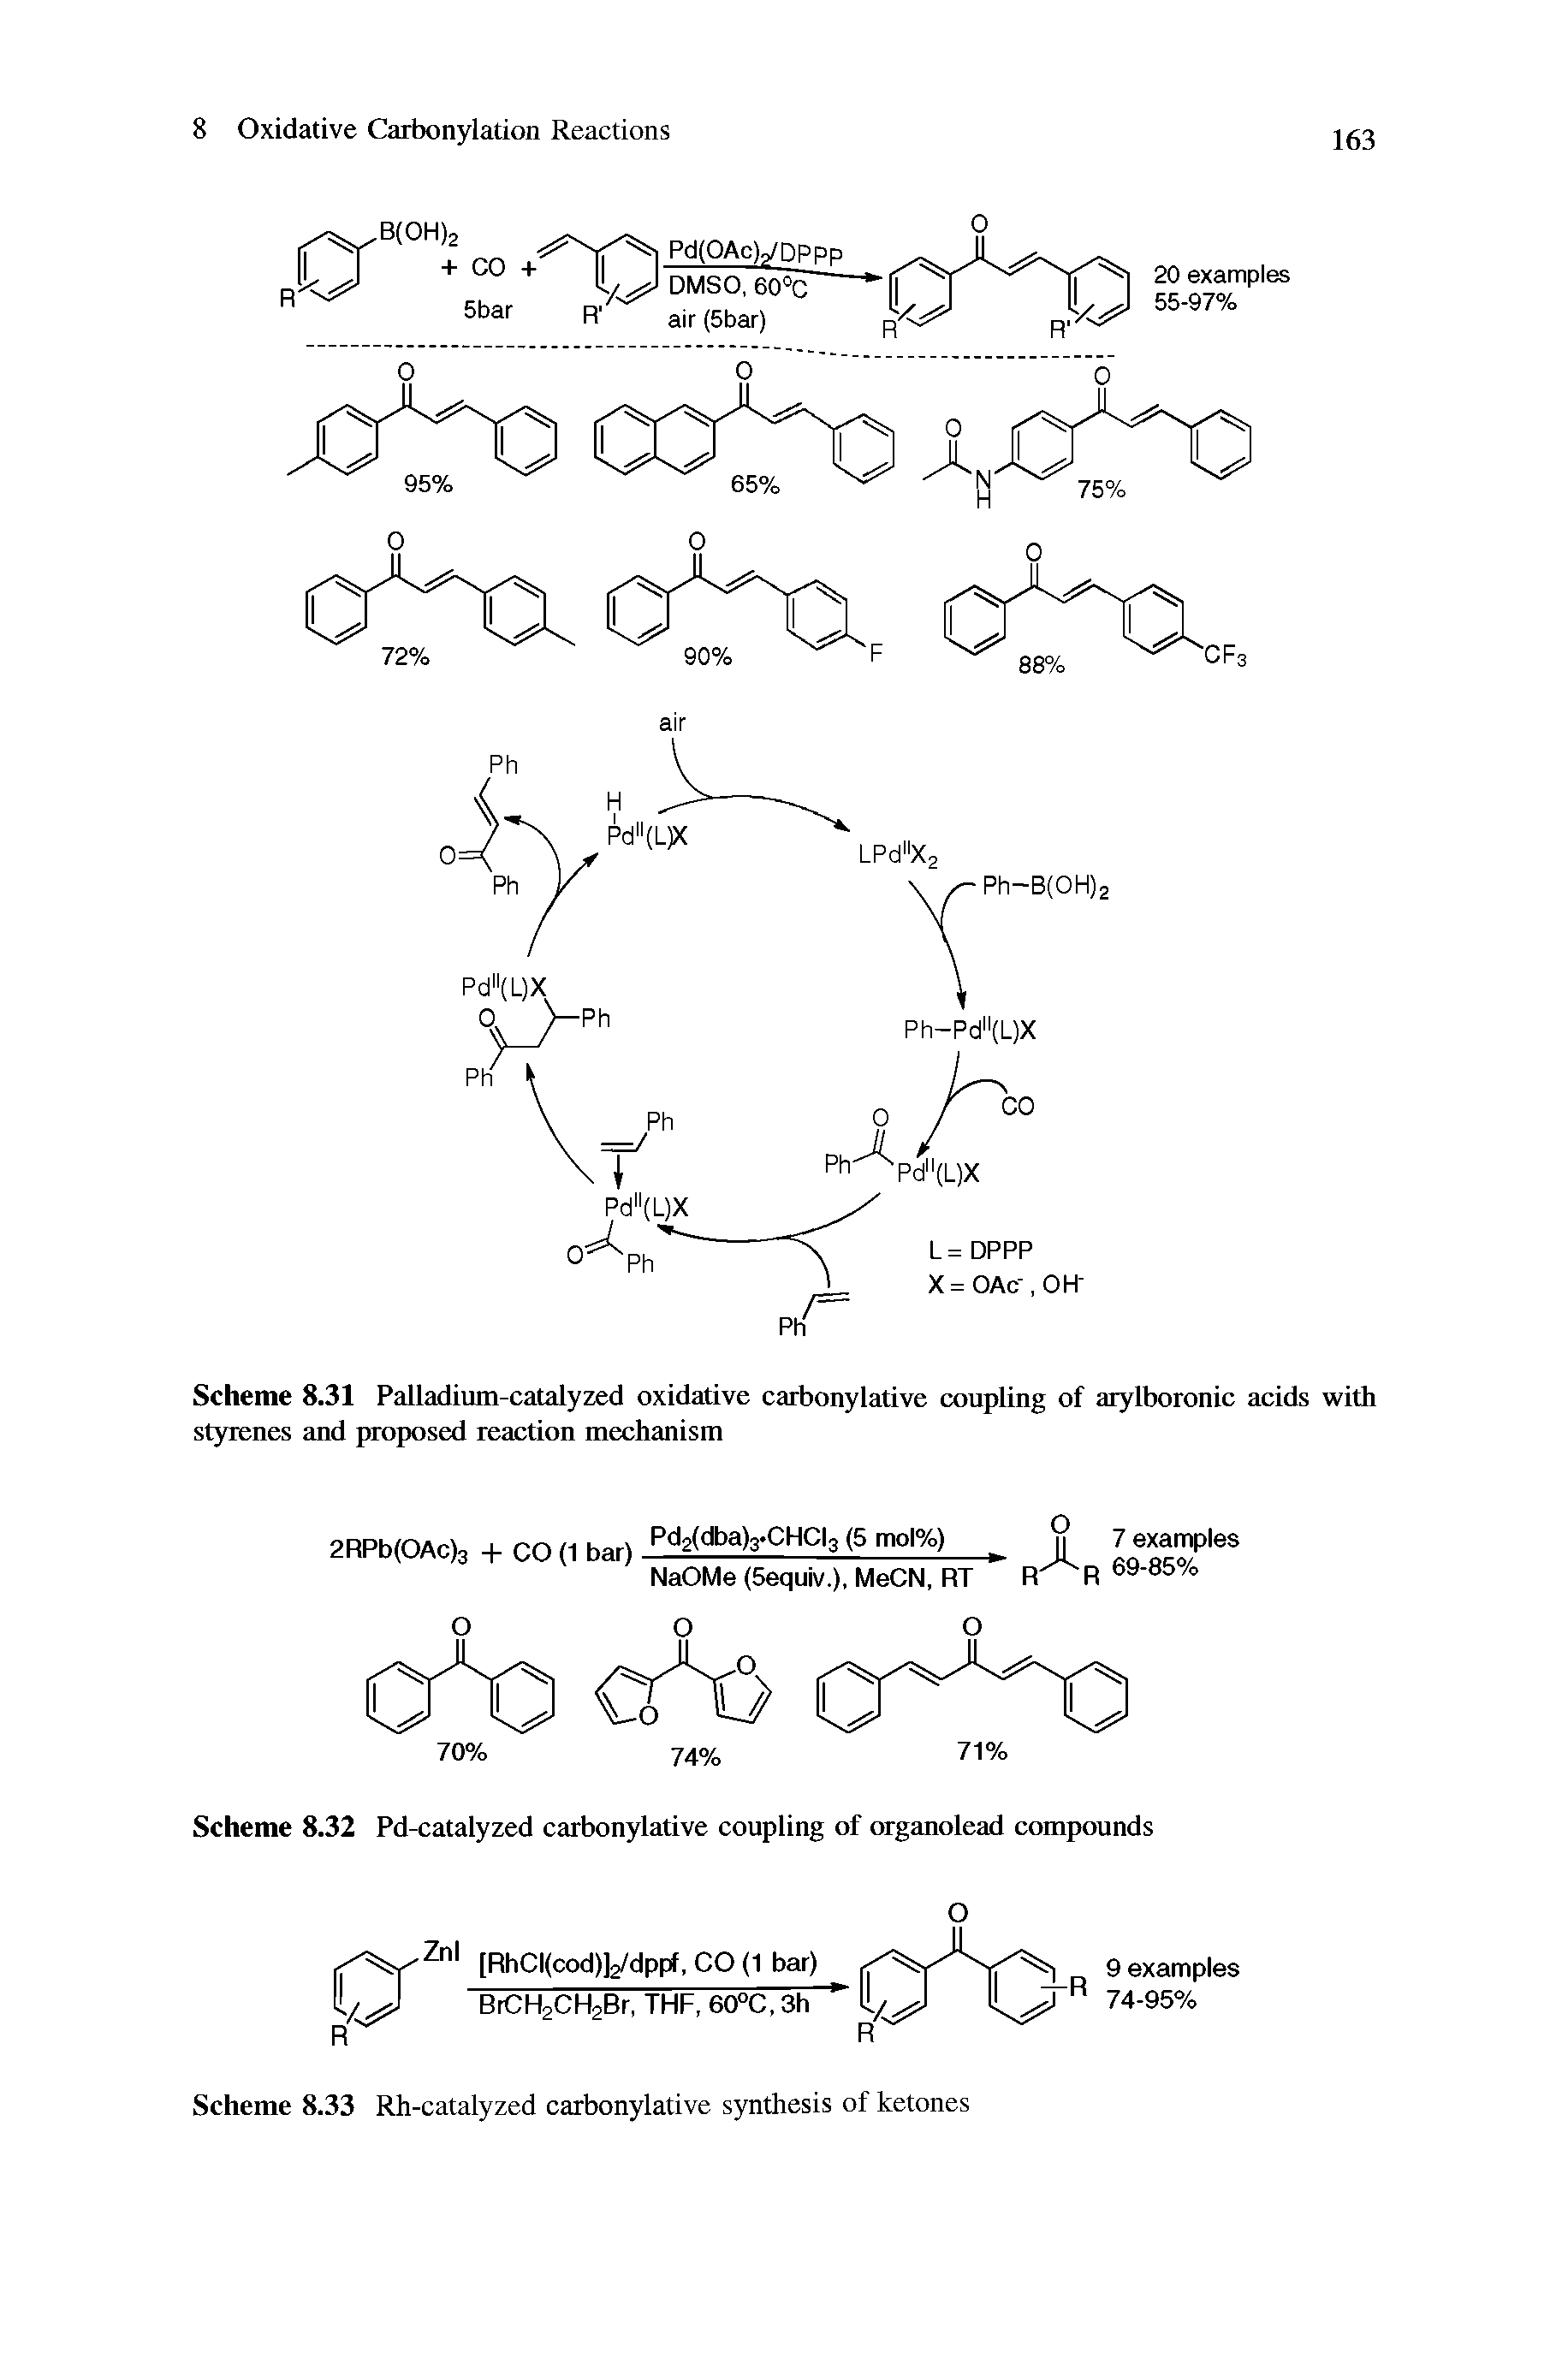 Scheme 8.31 Palladium-catalyzed oxidative carbonylative coupling of arylboronic acids with styrenes and proposed reaction mechanism...